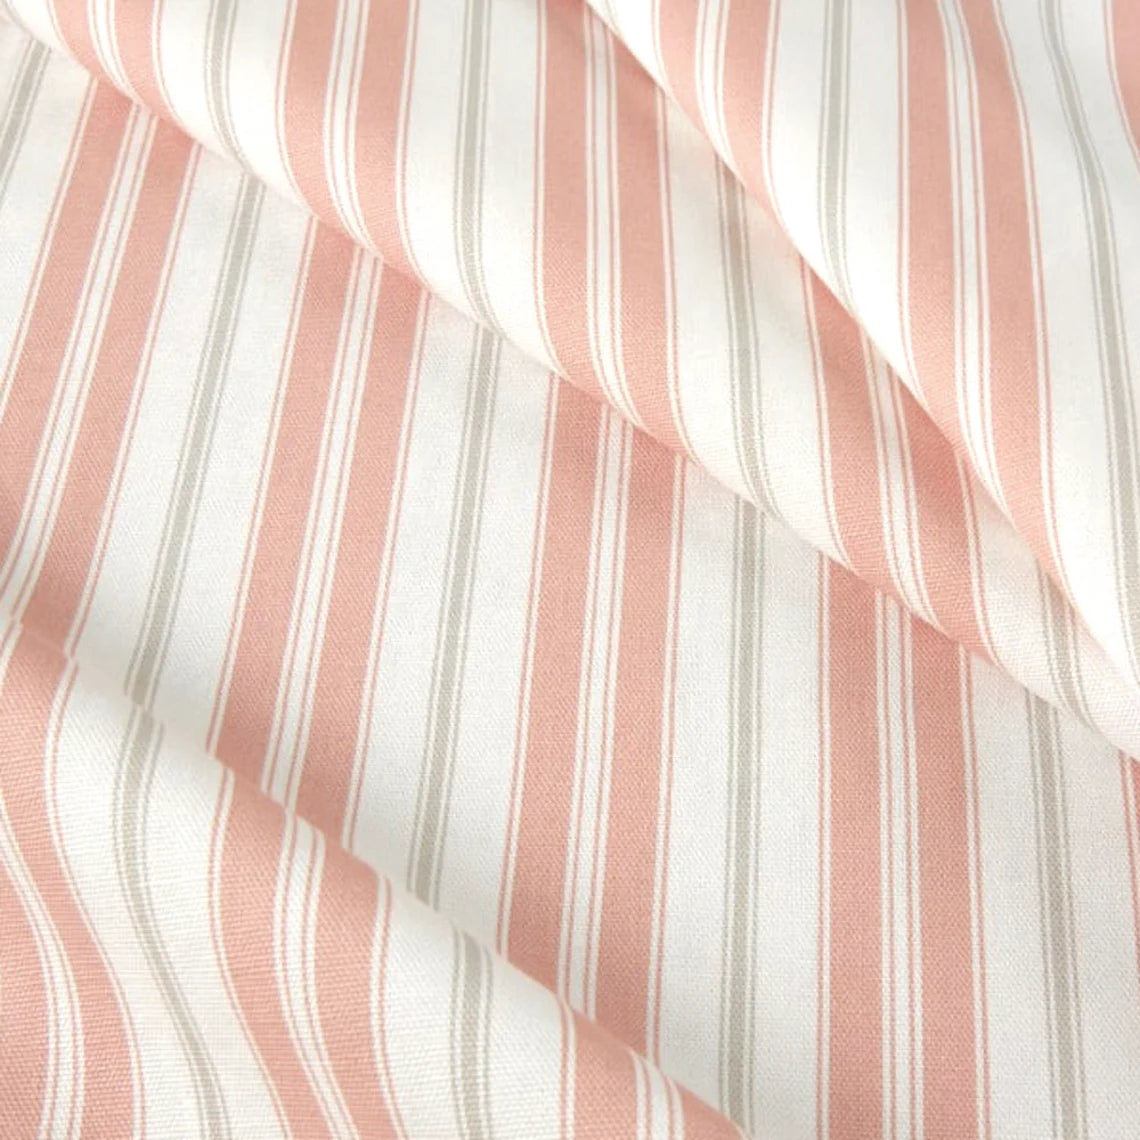 tab top curtain panels pair in newbury blush stripe- pink, gray, white